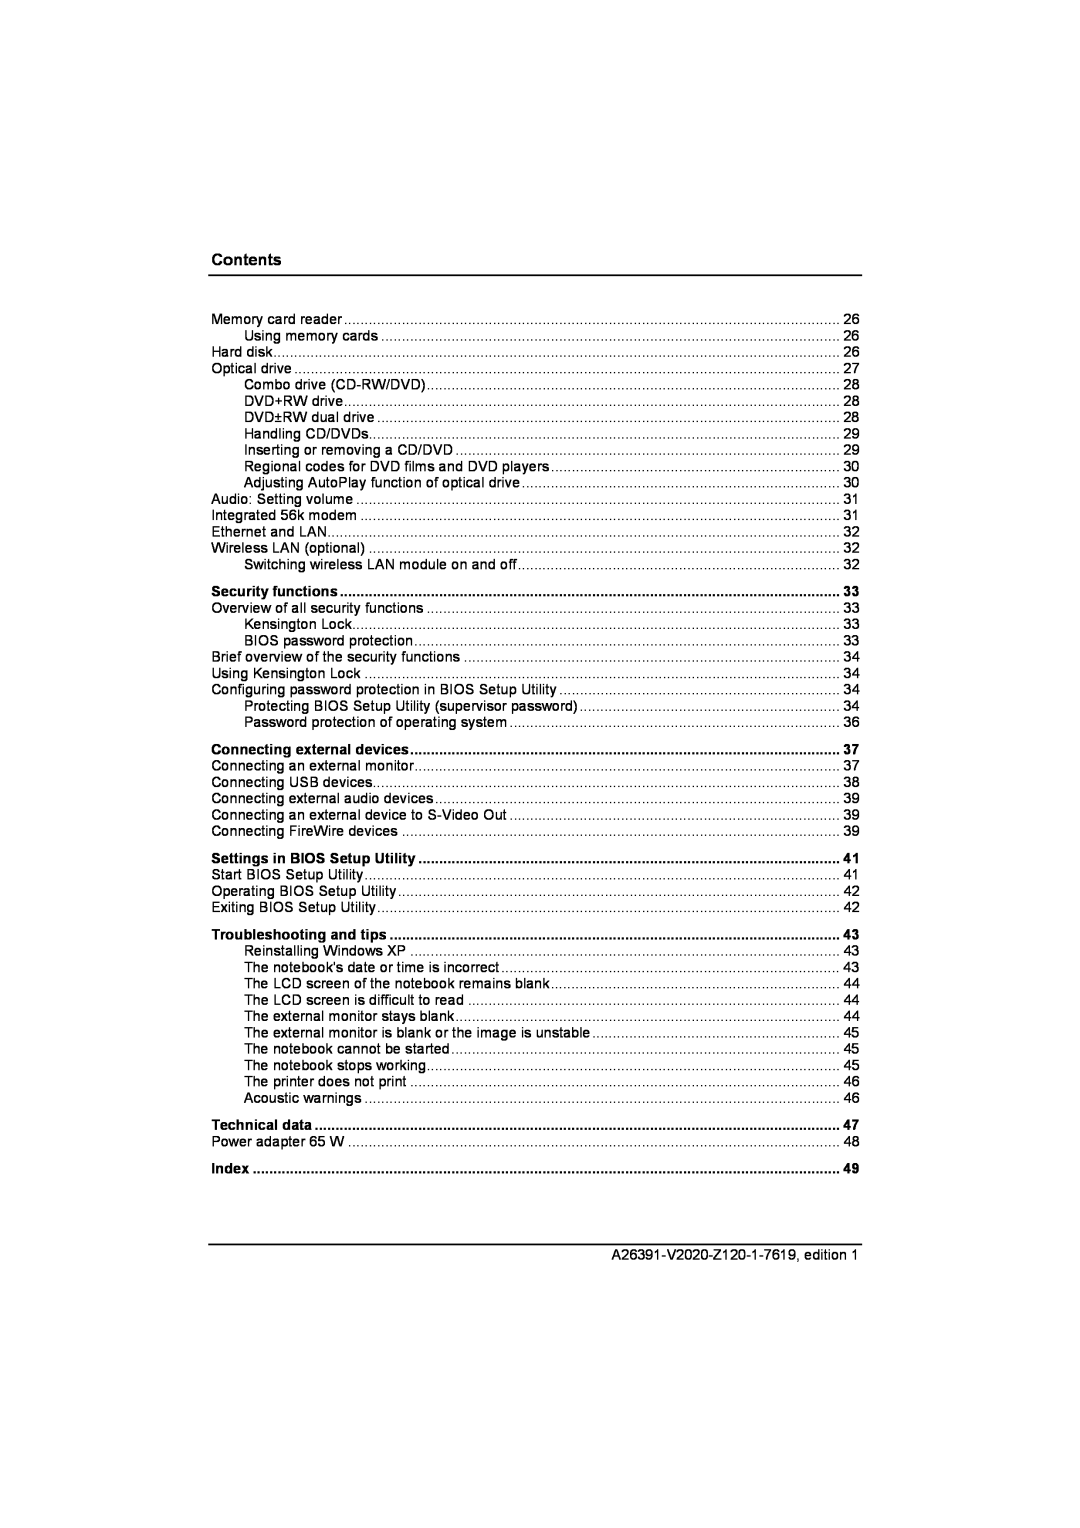 Fujitsu Siemens Computers V2020 manual Contents, Technical data, Index 